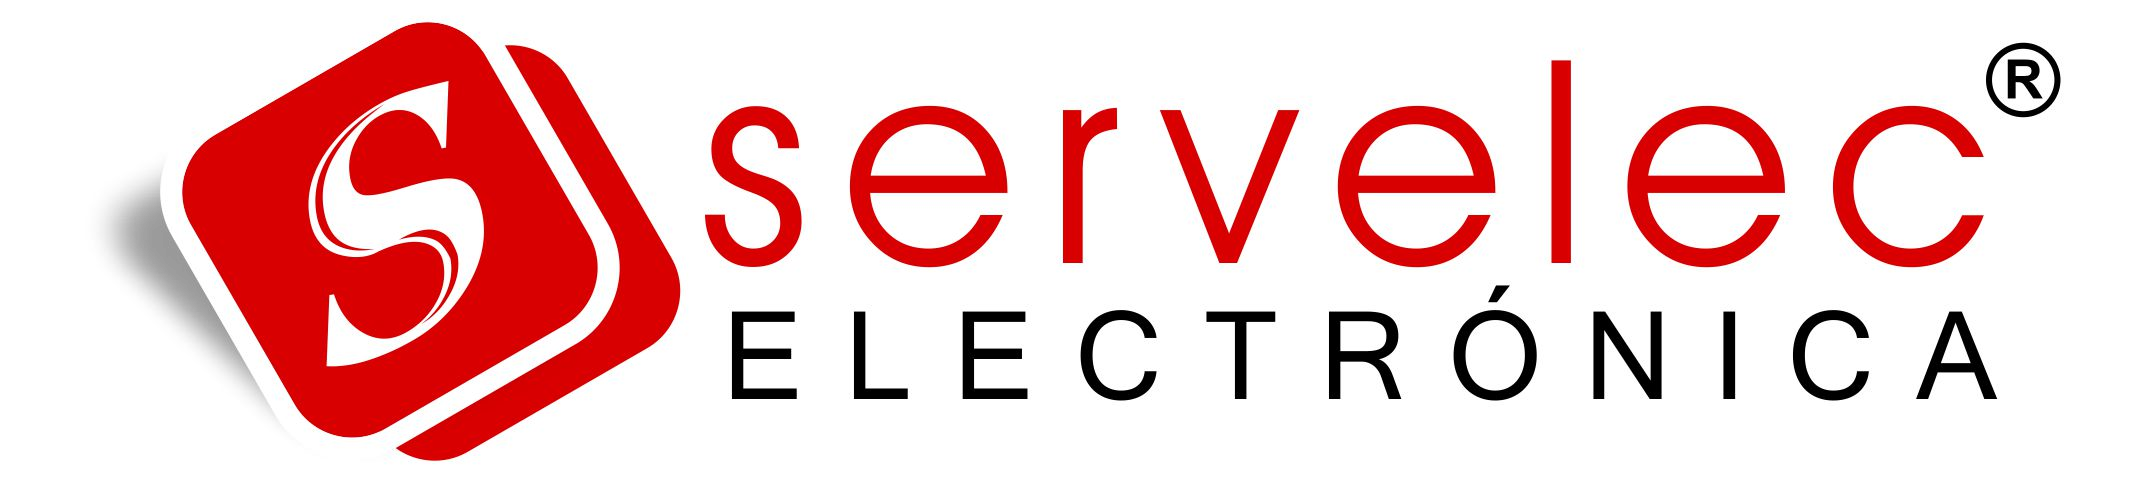 logo Servelec